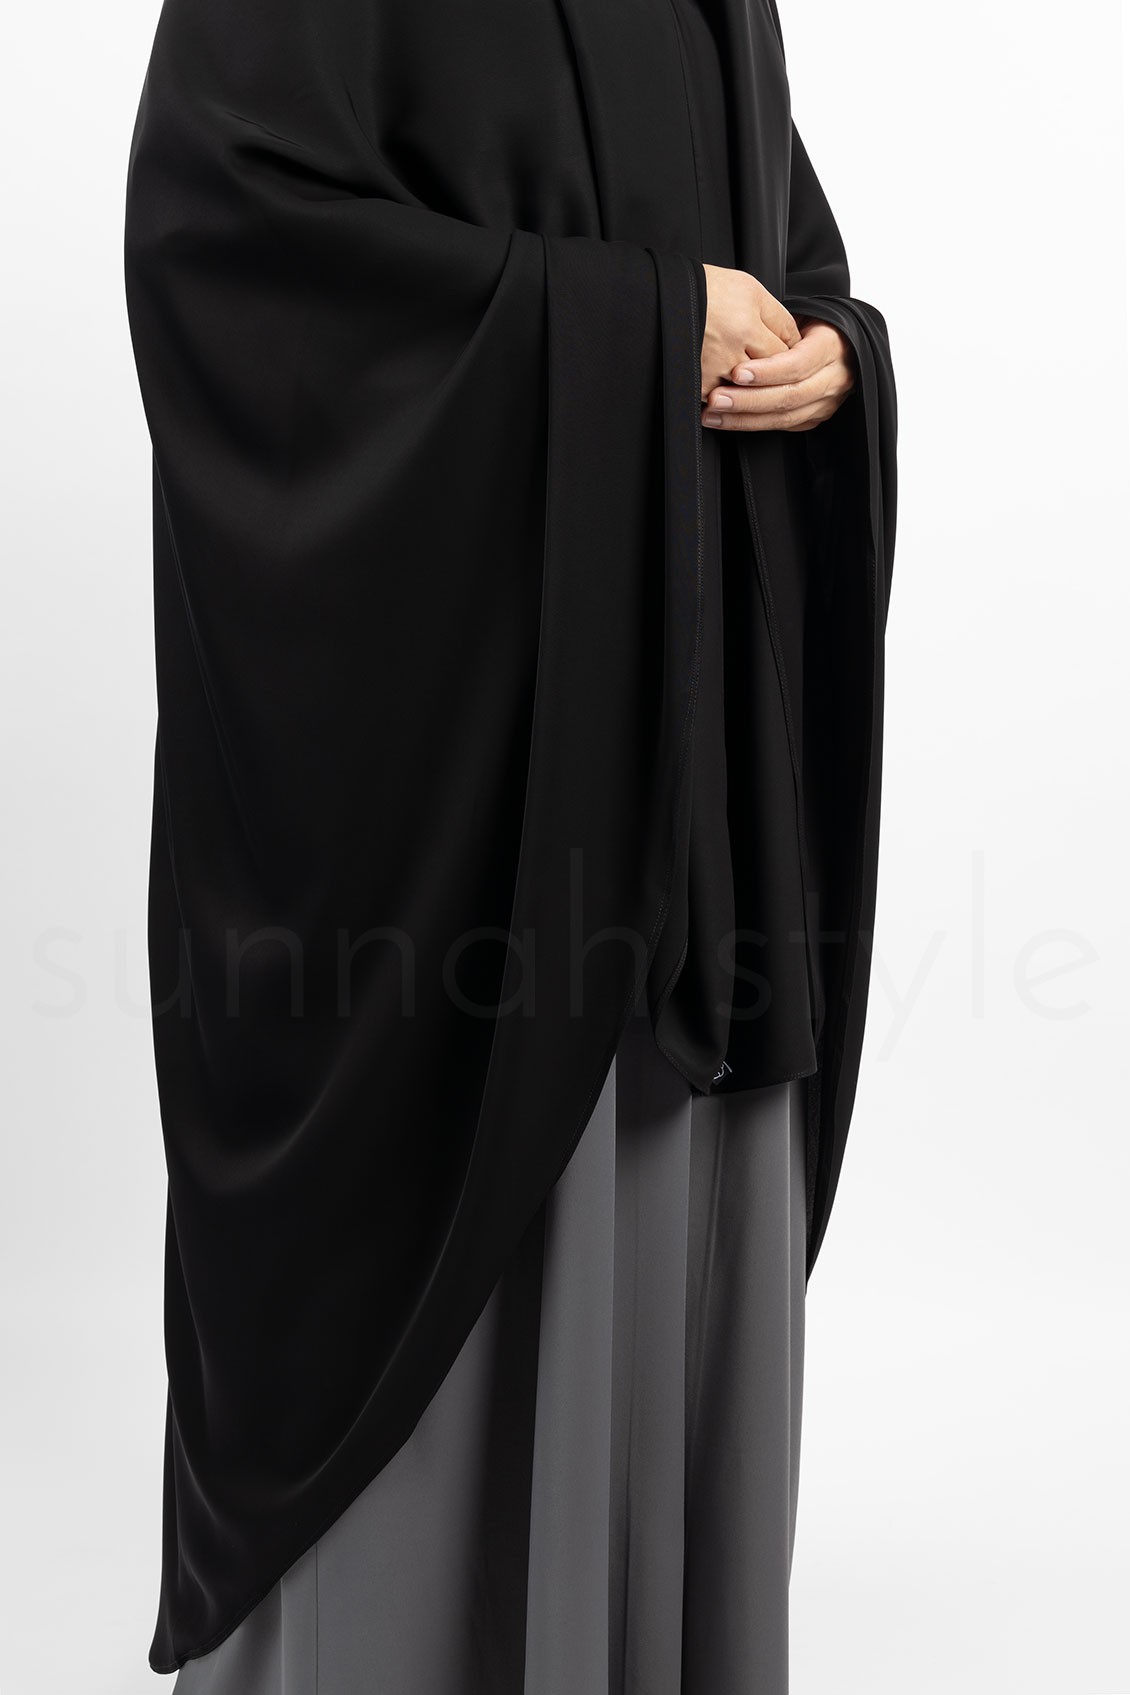 Sunnah Style Essentials Khimar Full Length Tall Black